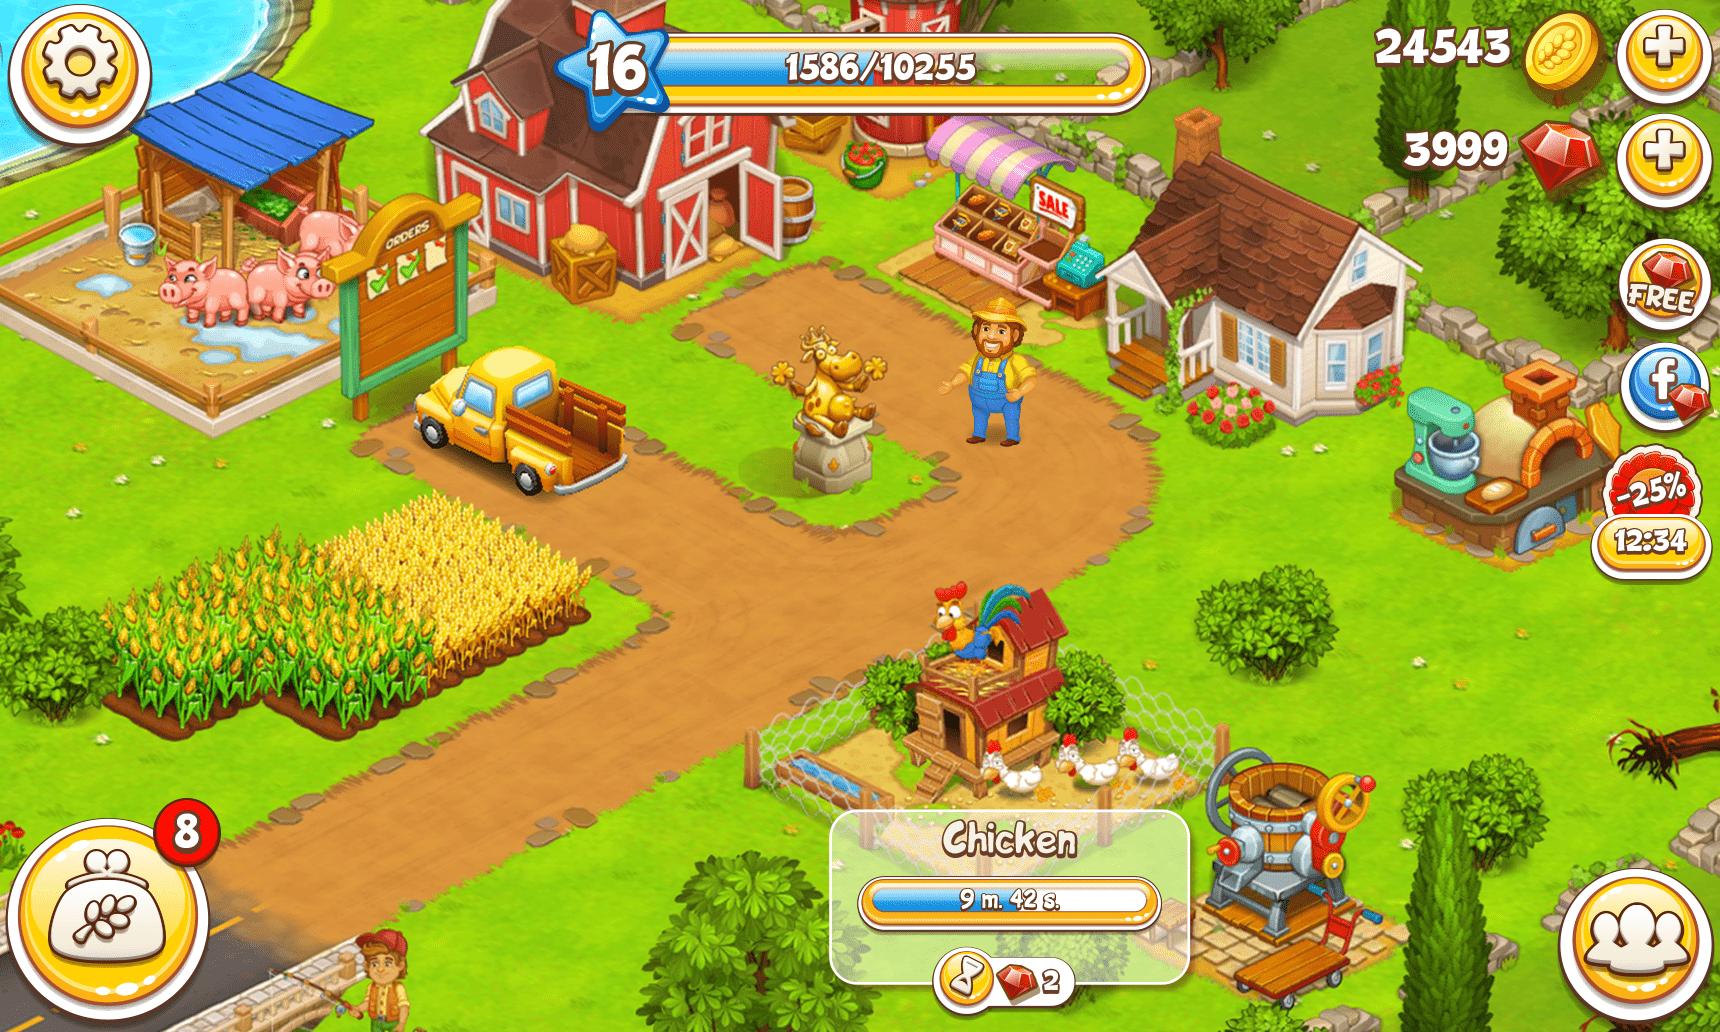 Farm Town: Happy village near small city and town 3.41 Screenshot 10